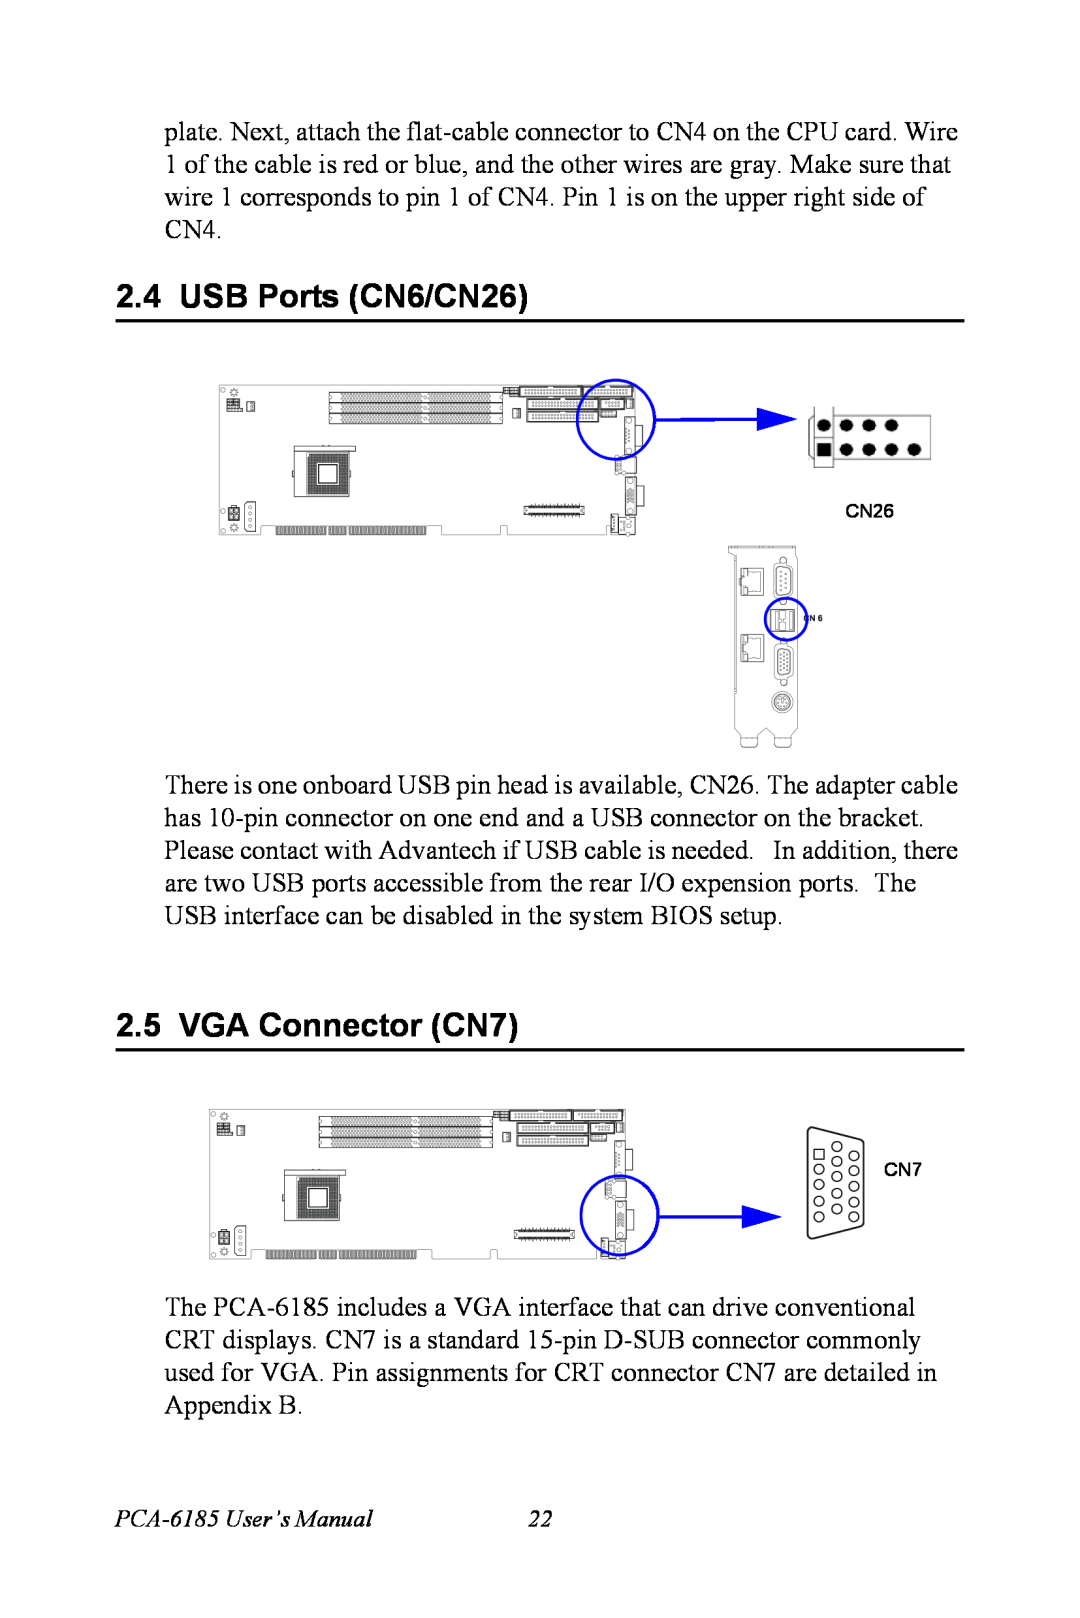 Advantech PCA-6185 user manual USB Ports CN6/CN26, VGA Connector CN7 